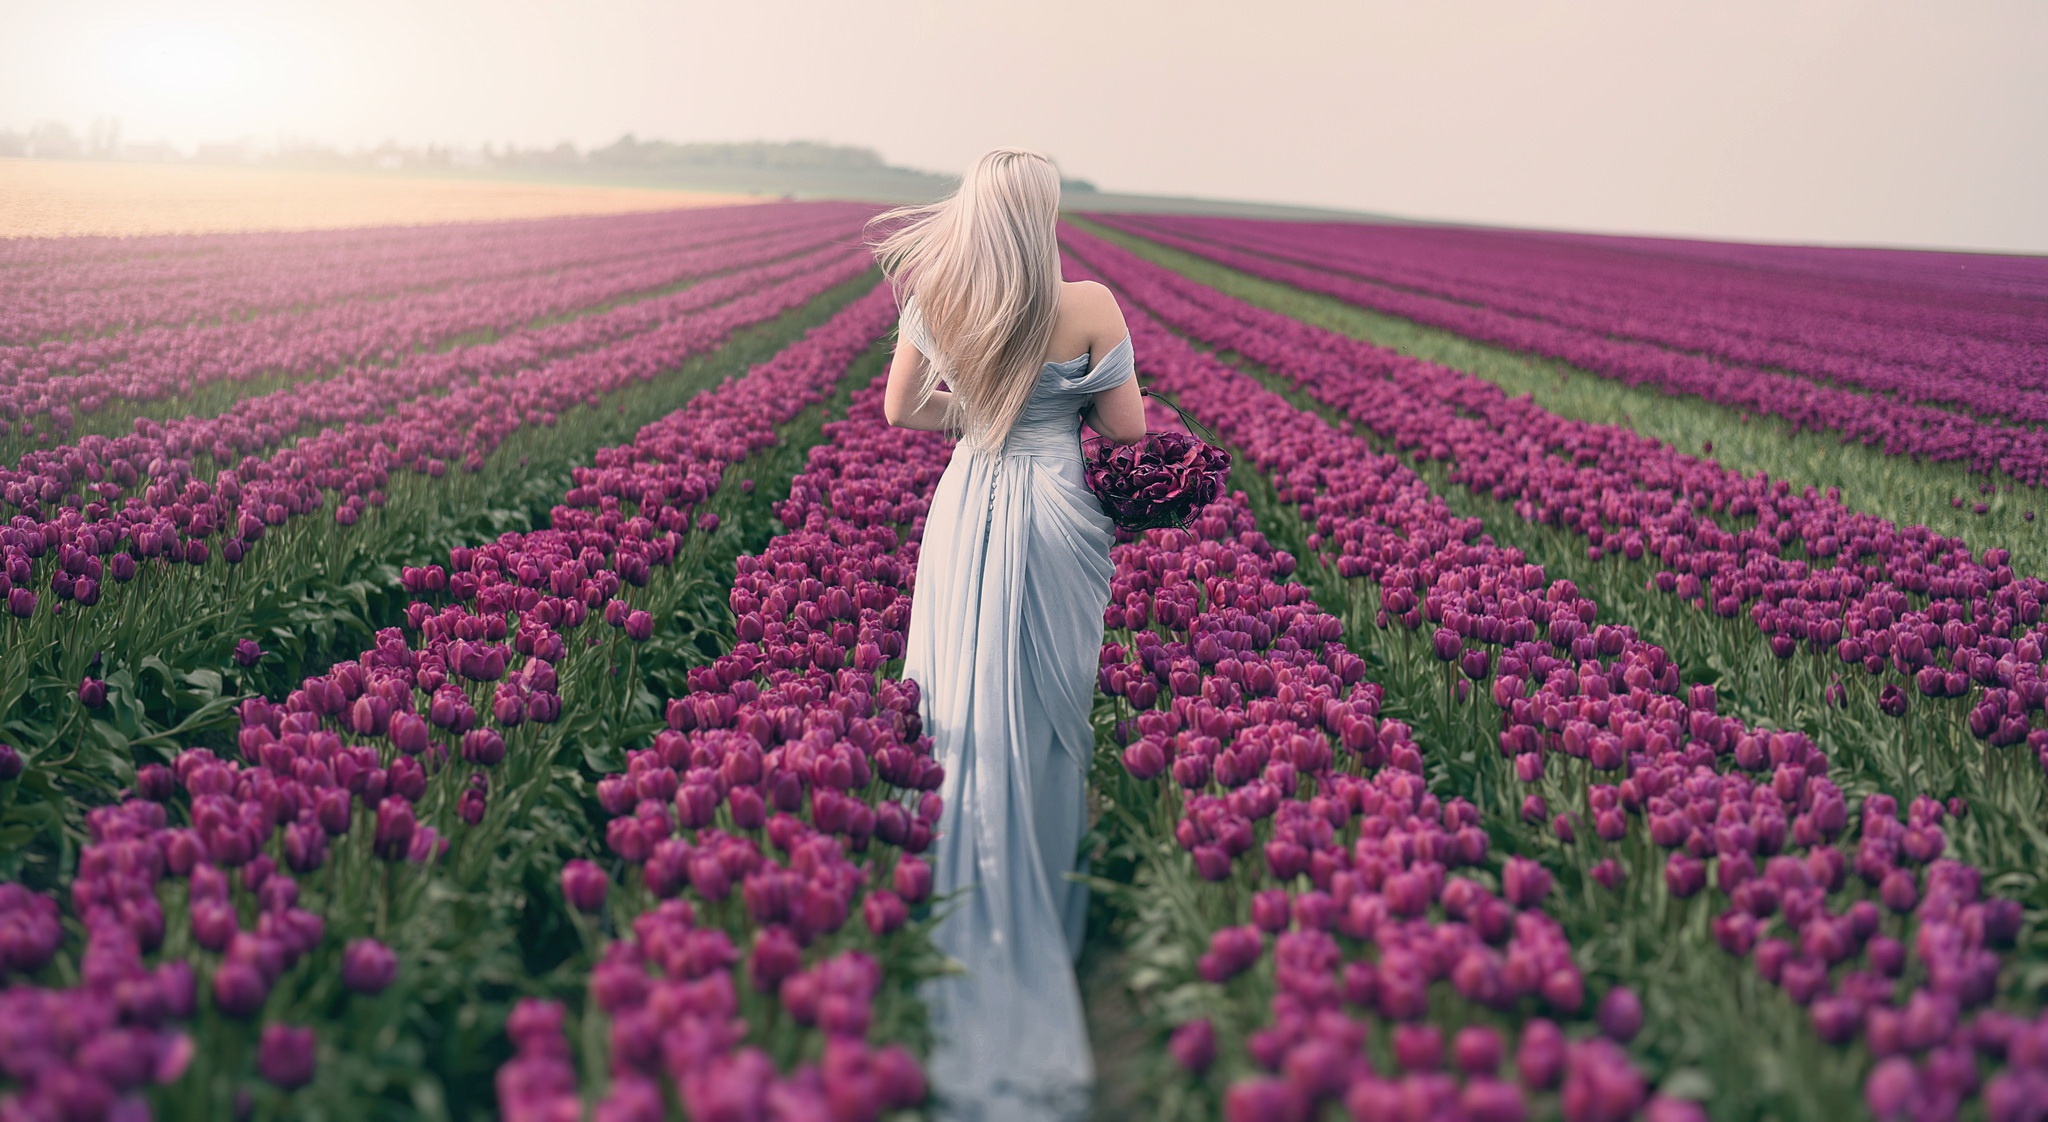 Девушка в поле среди цветов